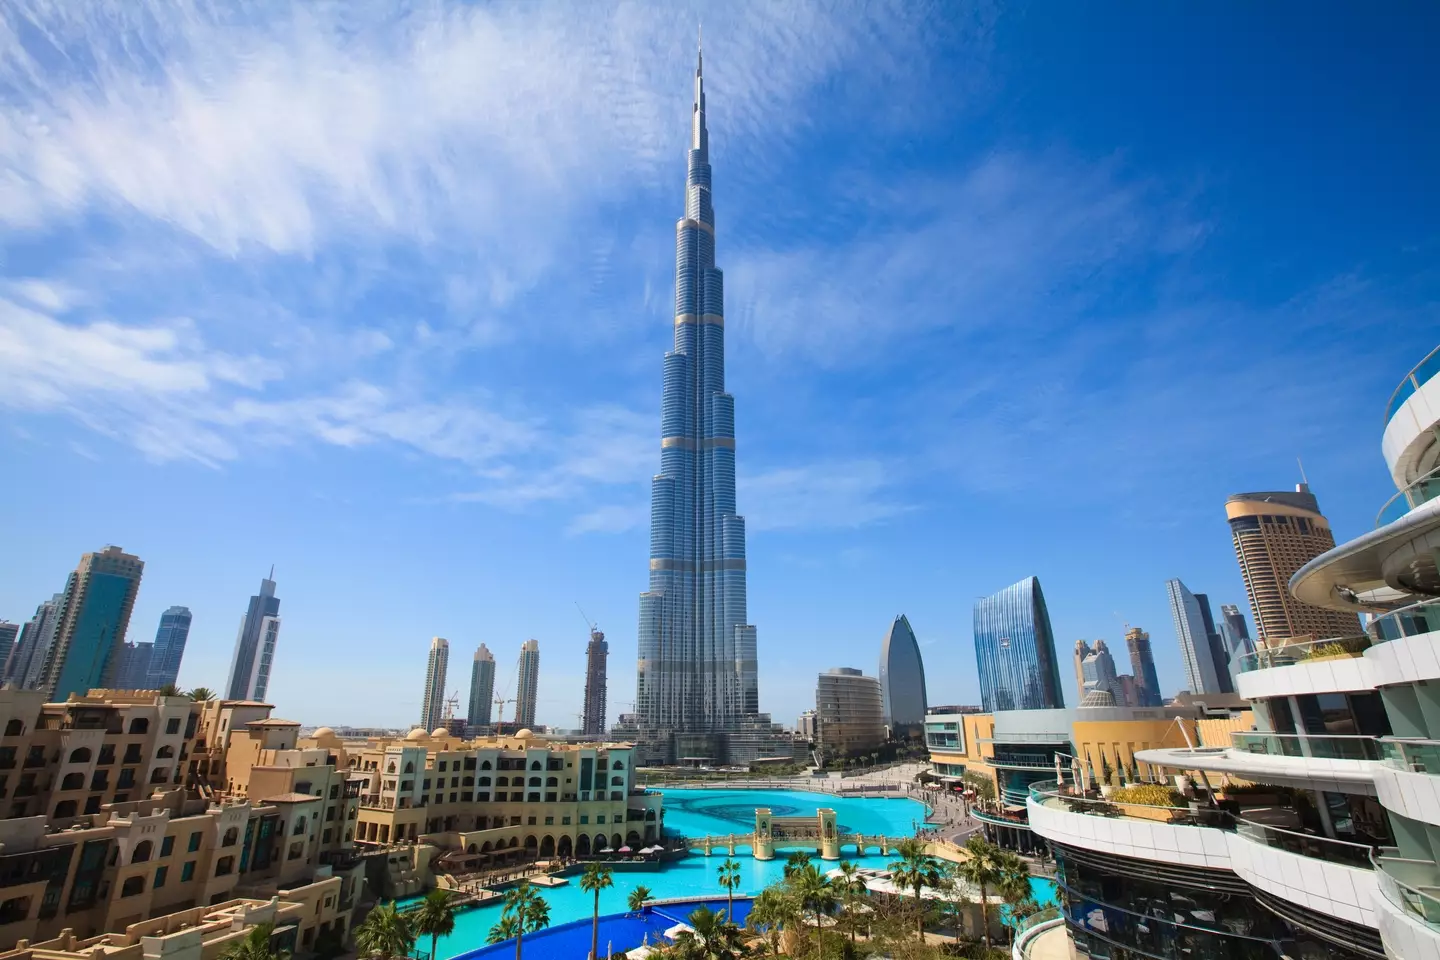 The mountain is twice the height of the Burj Khalifa.